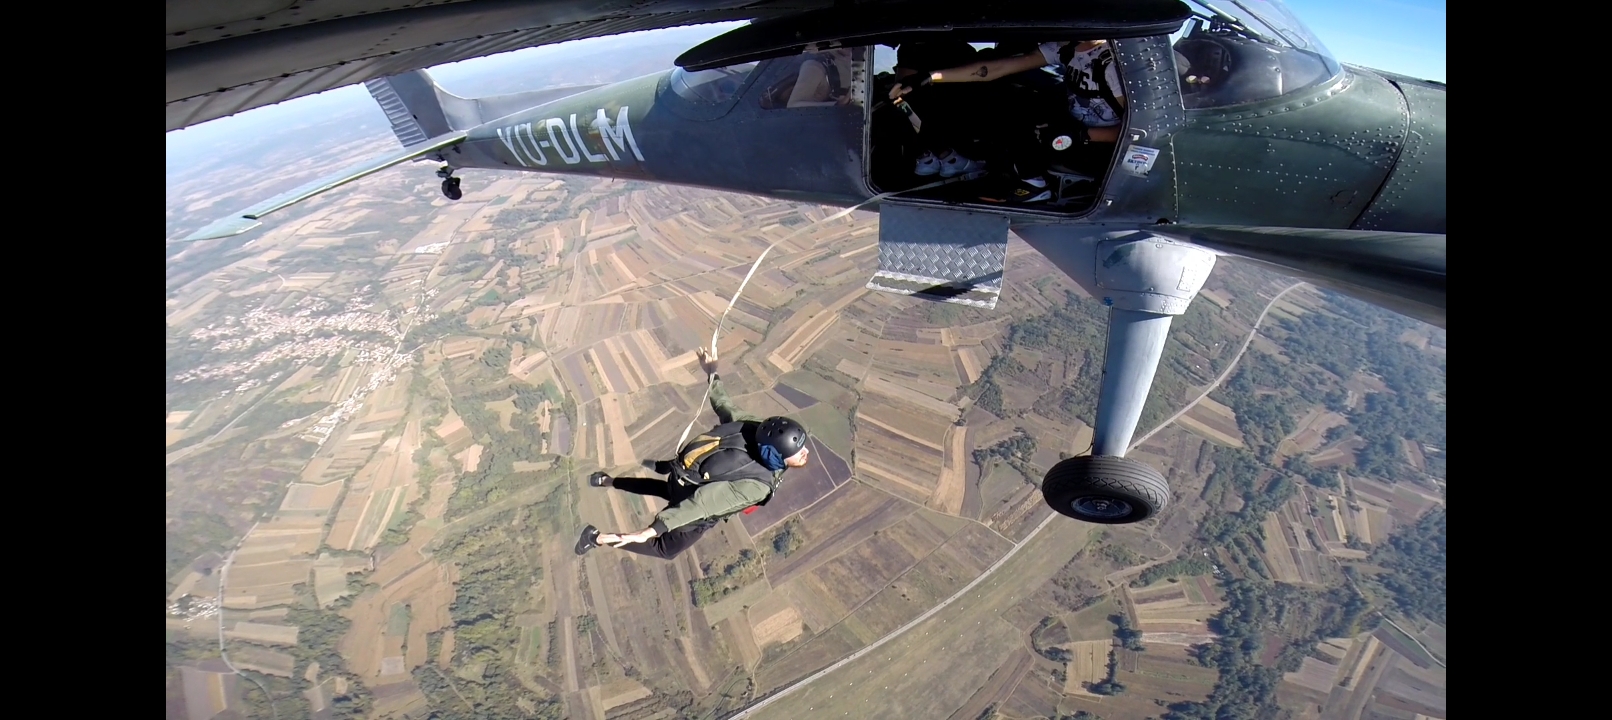 Prvi skok padobranom – konkurs AK “Naša krila” i ministarstva odbrane